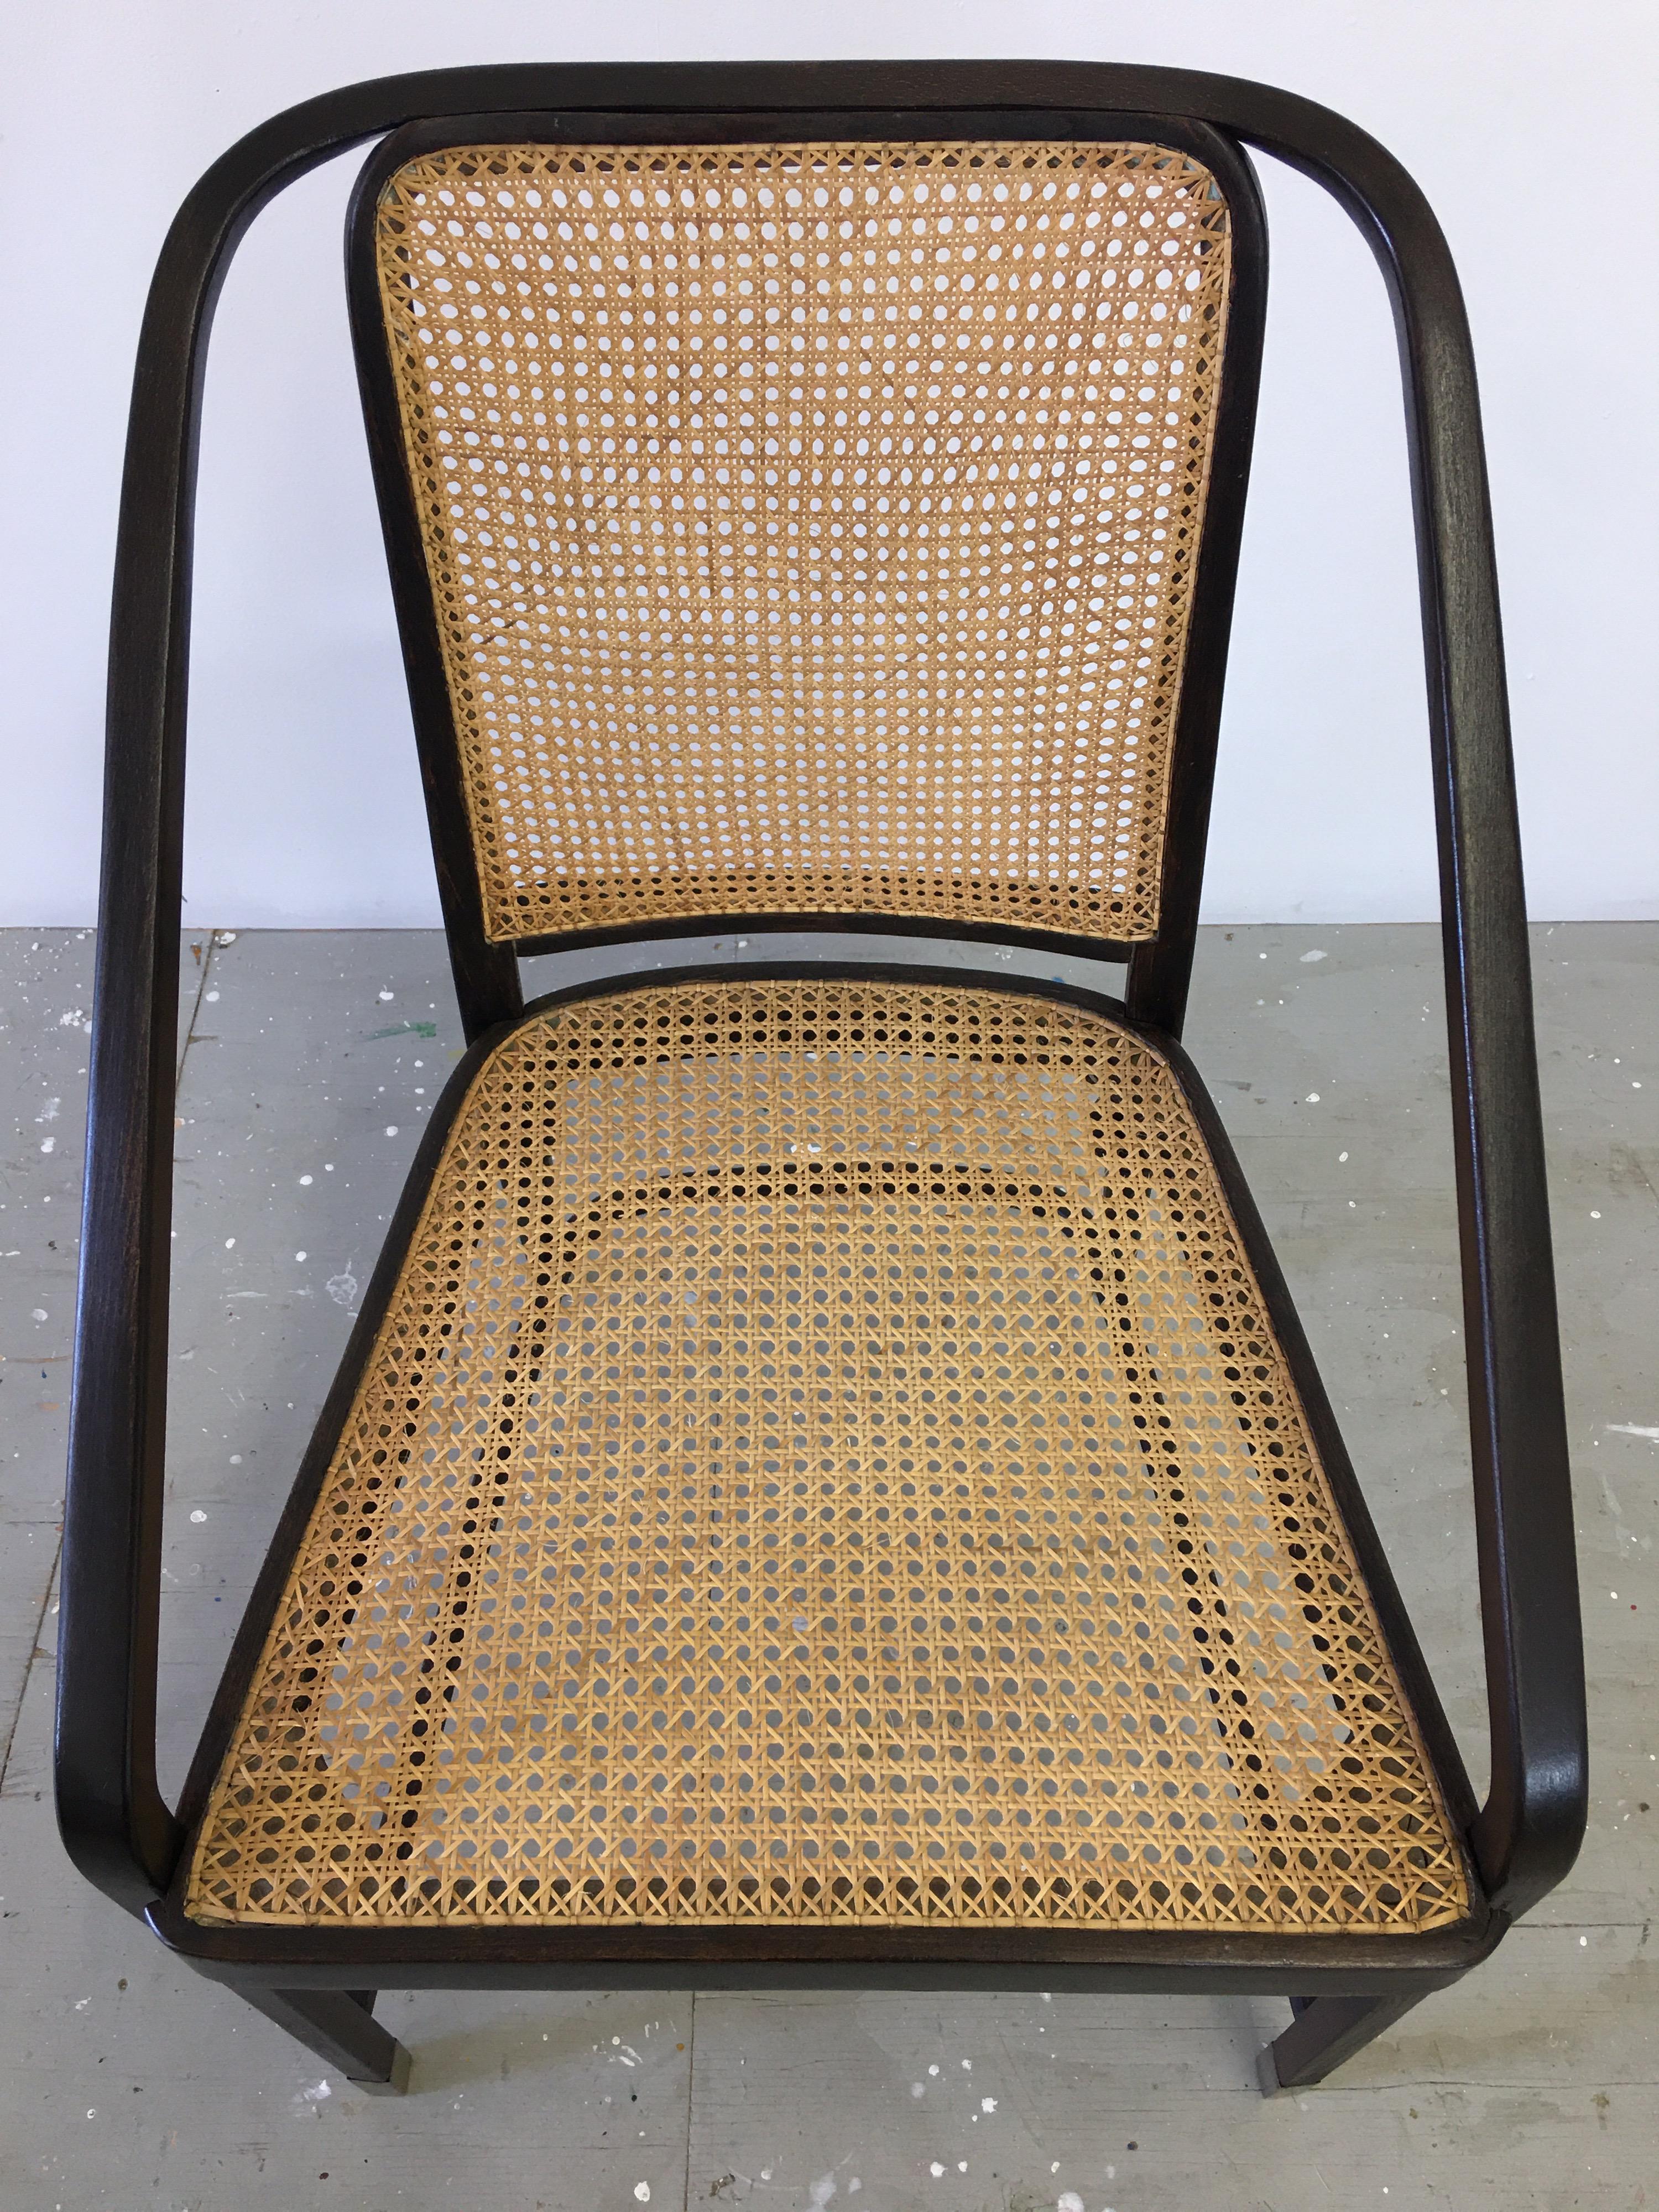 butaka chair for sale